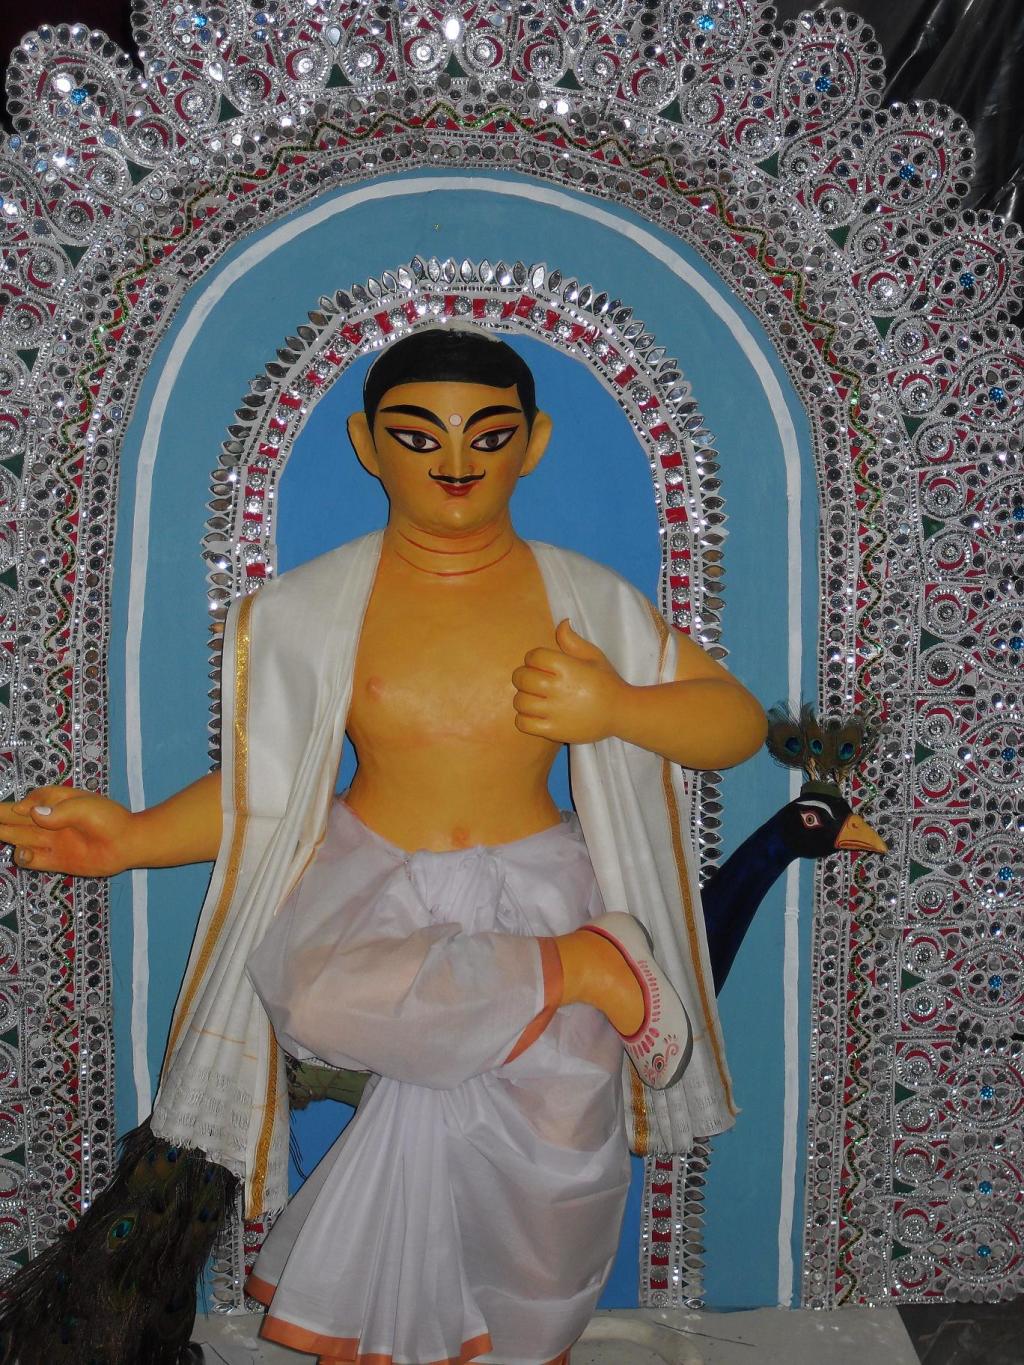 Kartikeya sitting on a peacock